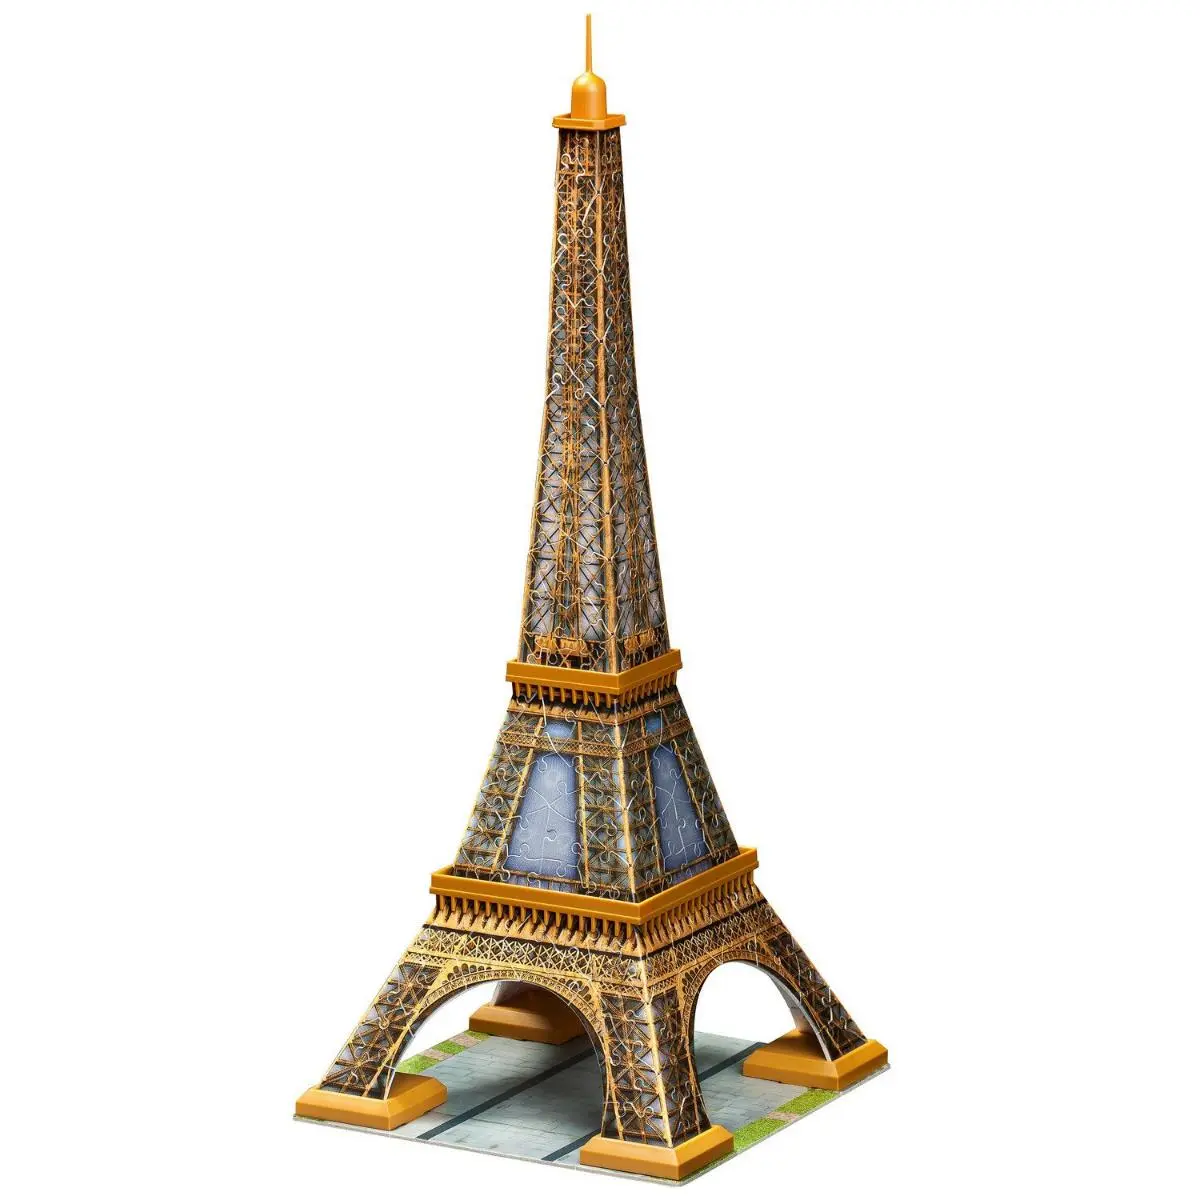 3D Пазл "Эйфелева башня" (216 эл.) - фото